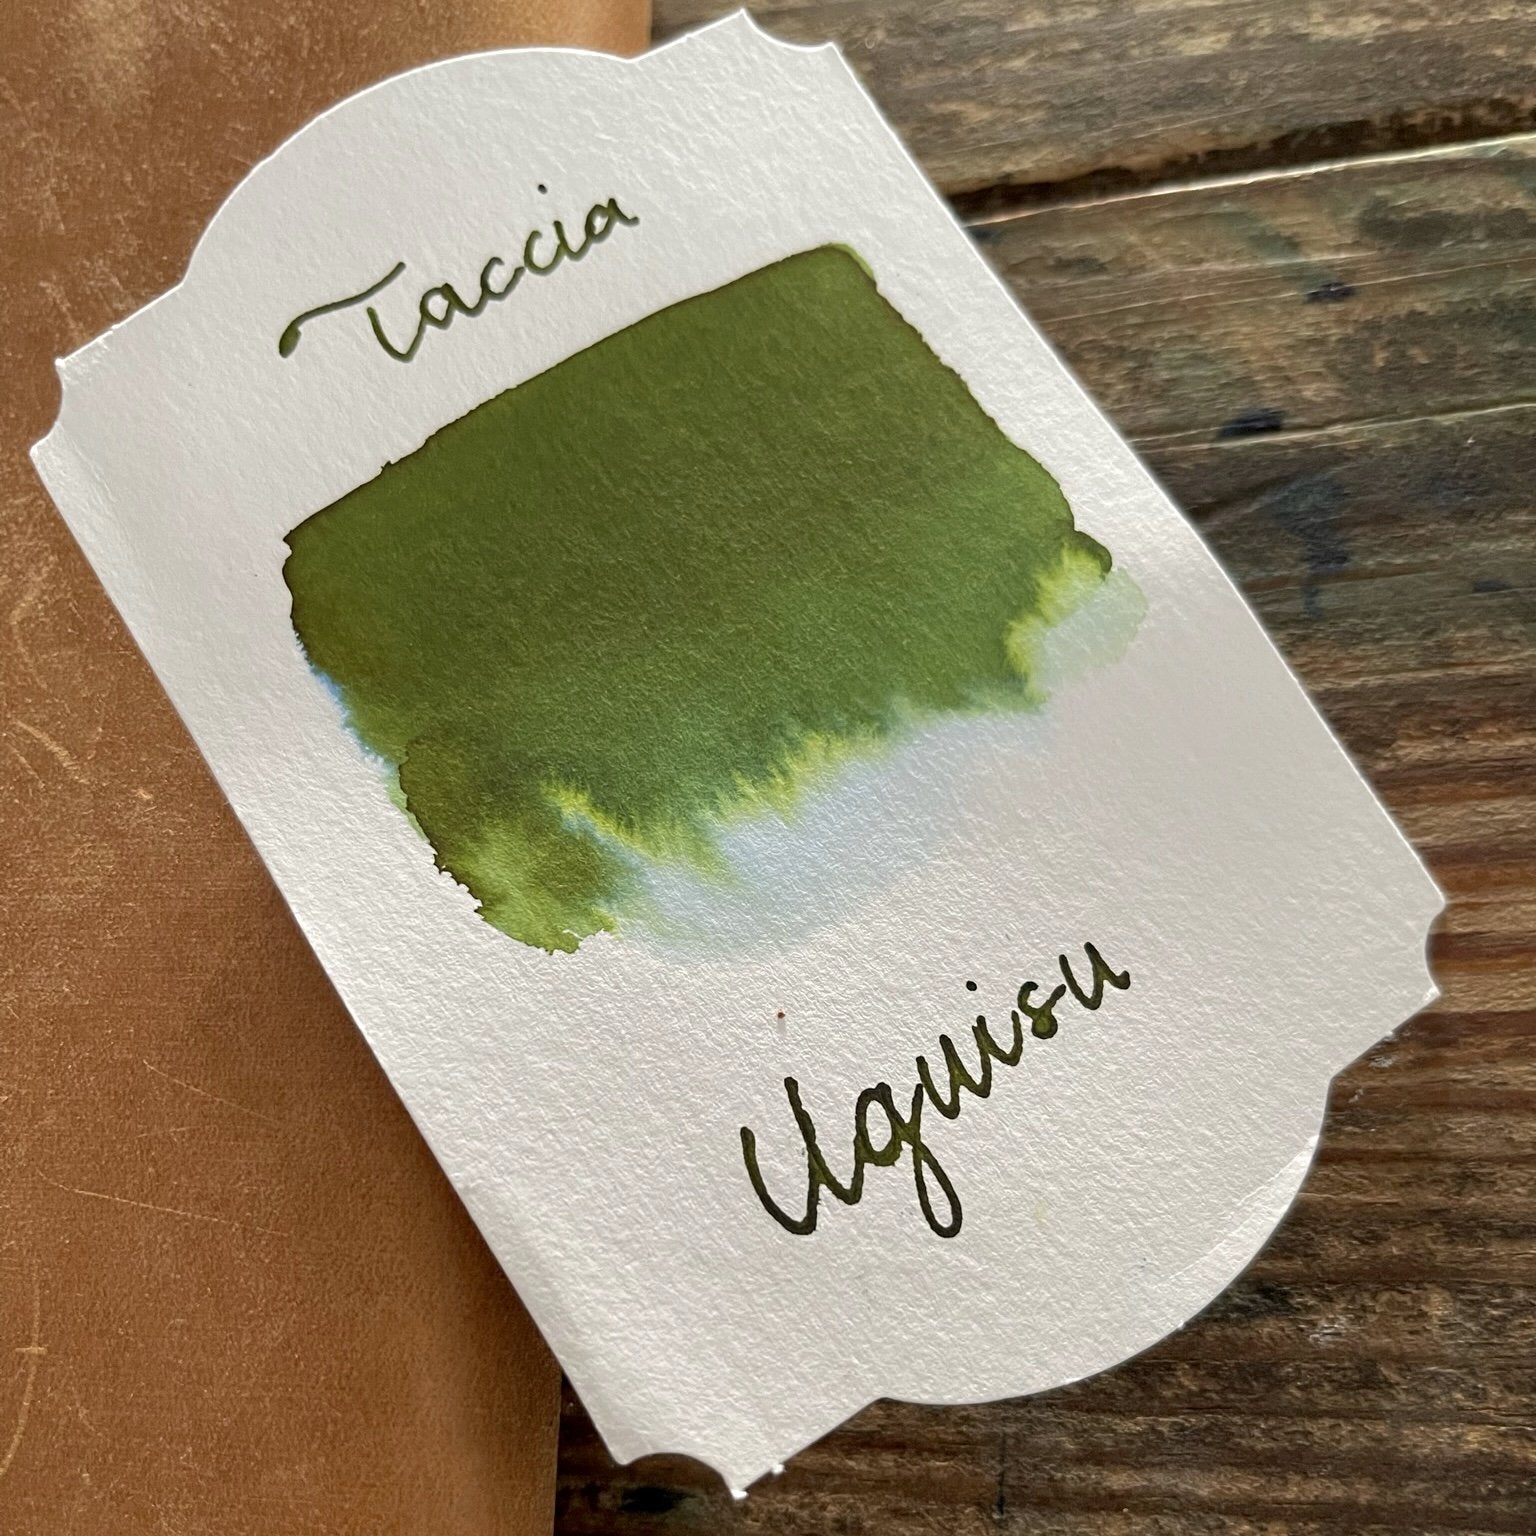 Taccia Uguisu Olive Green Ink